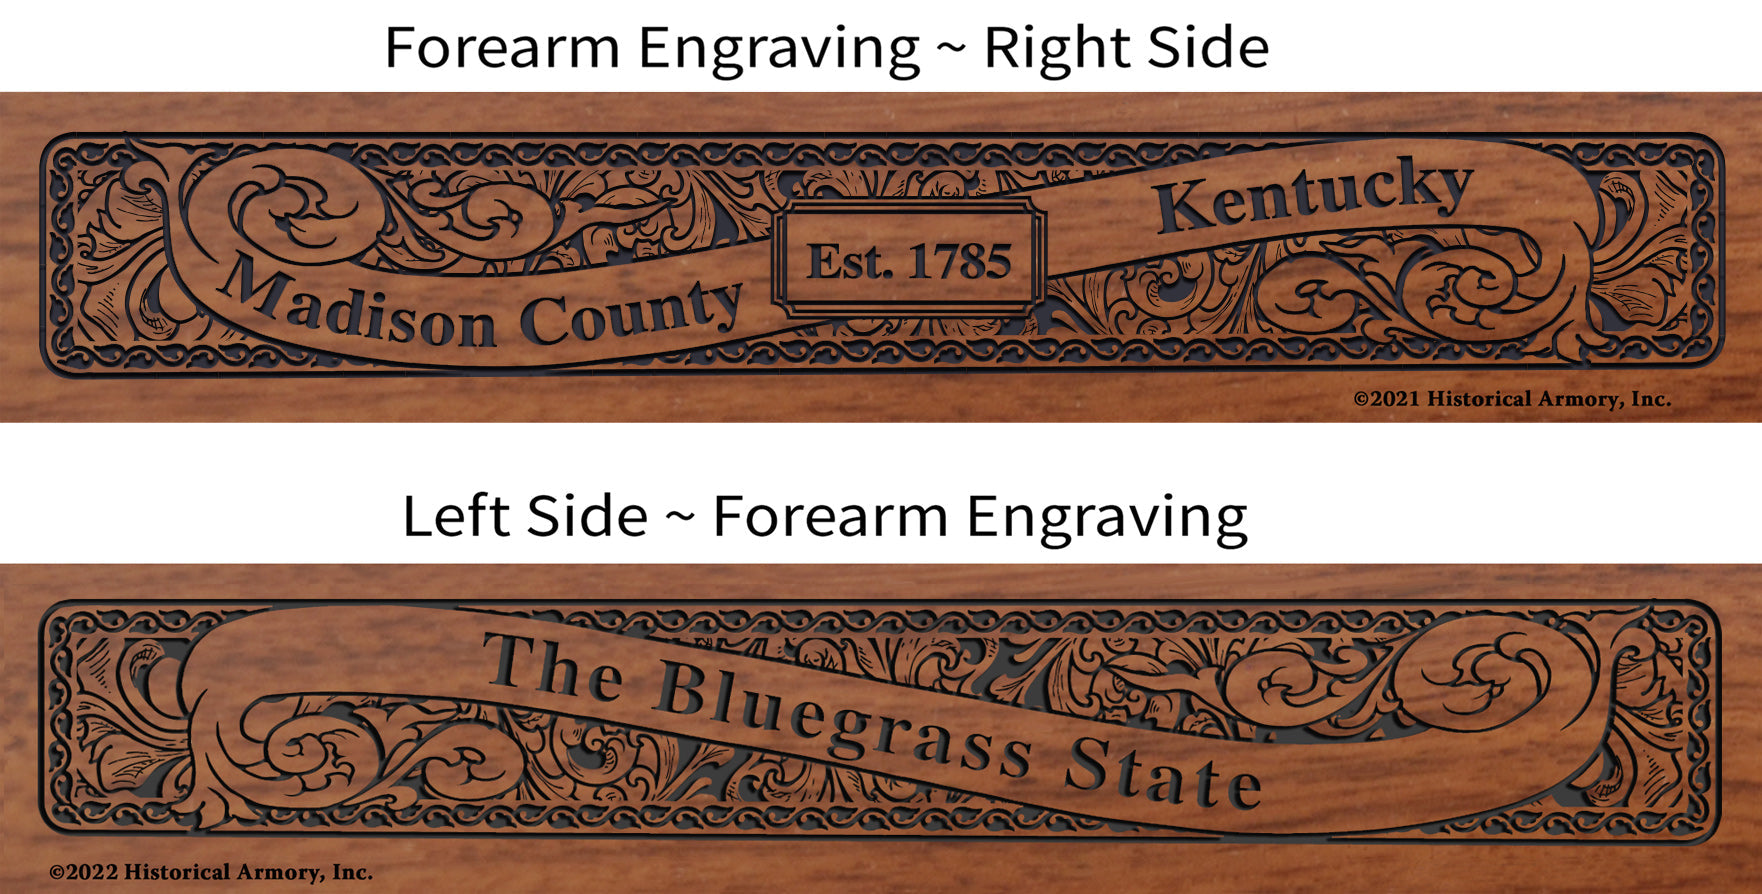 Madison County Kentucky Engraved Rifle Forearm